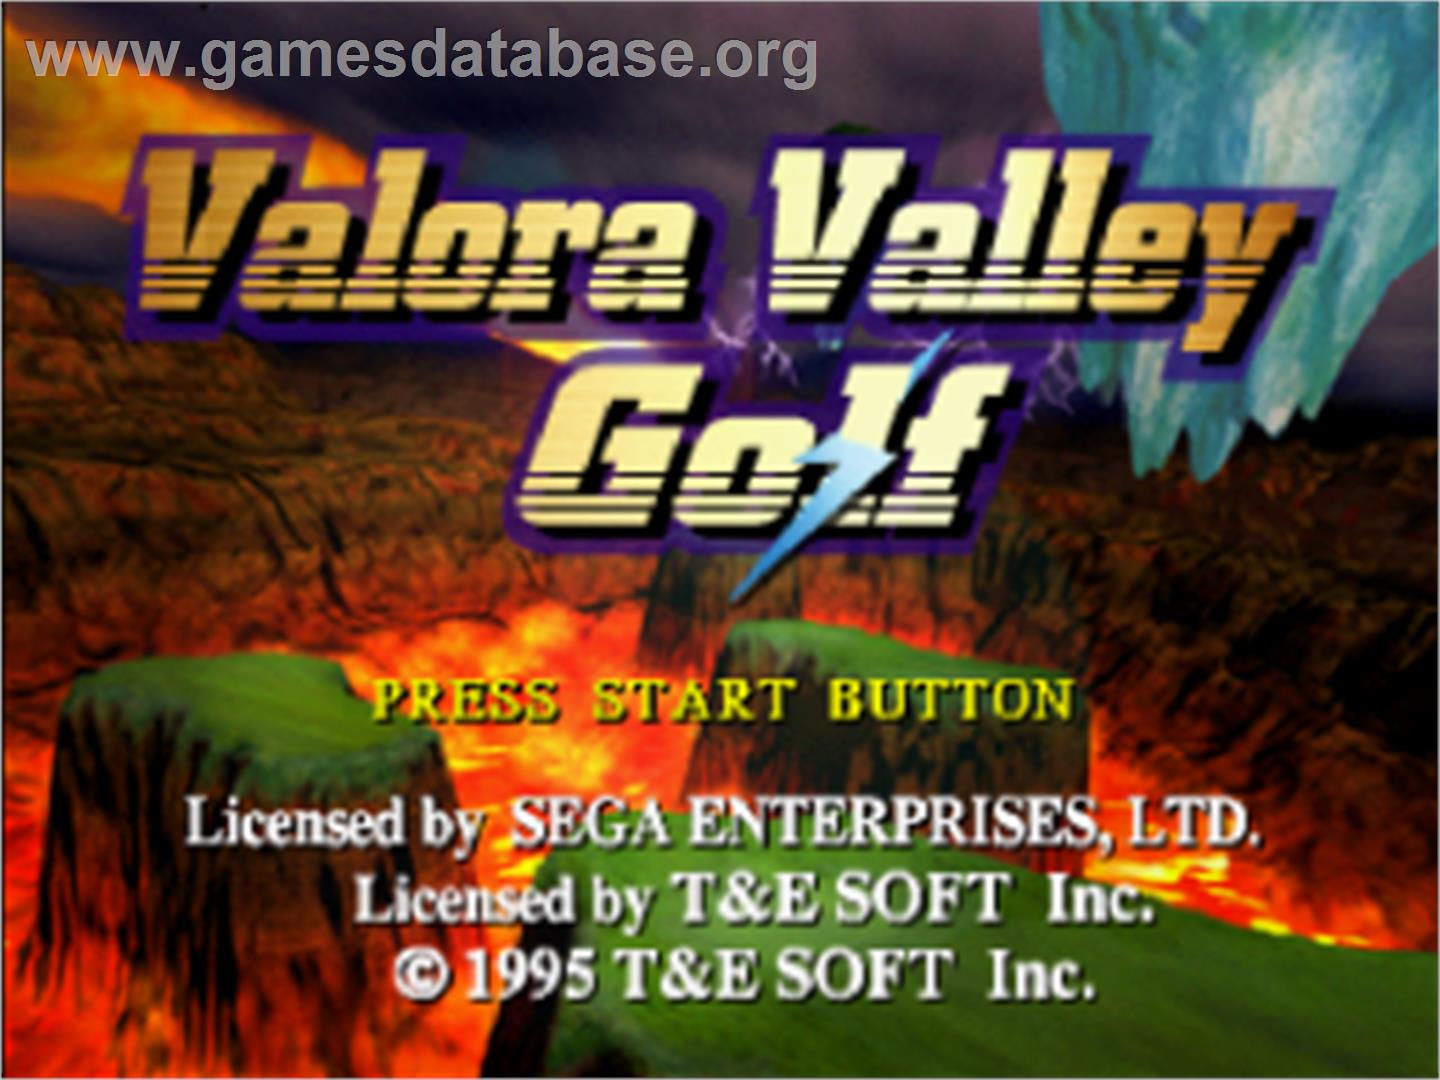 Valora Valley Golf - Sega Saturn - Artwork - Title Screen